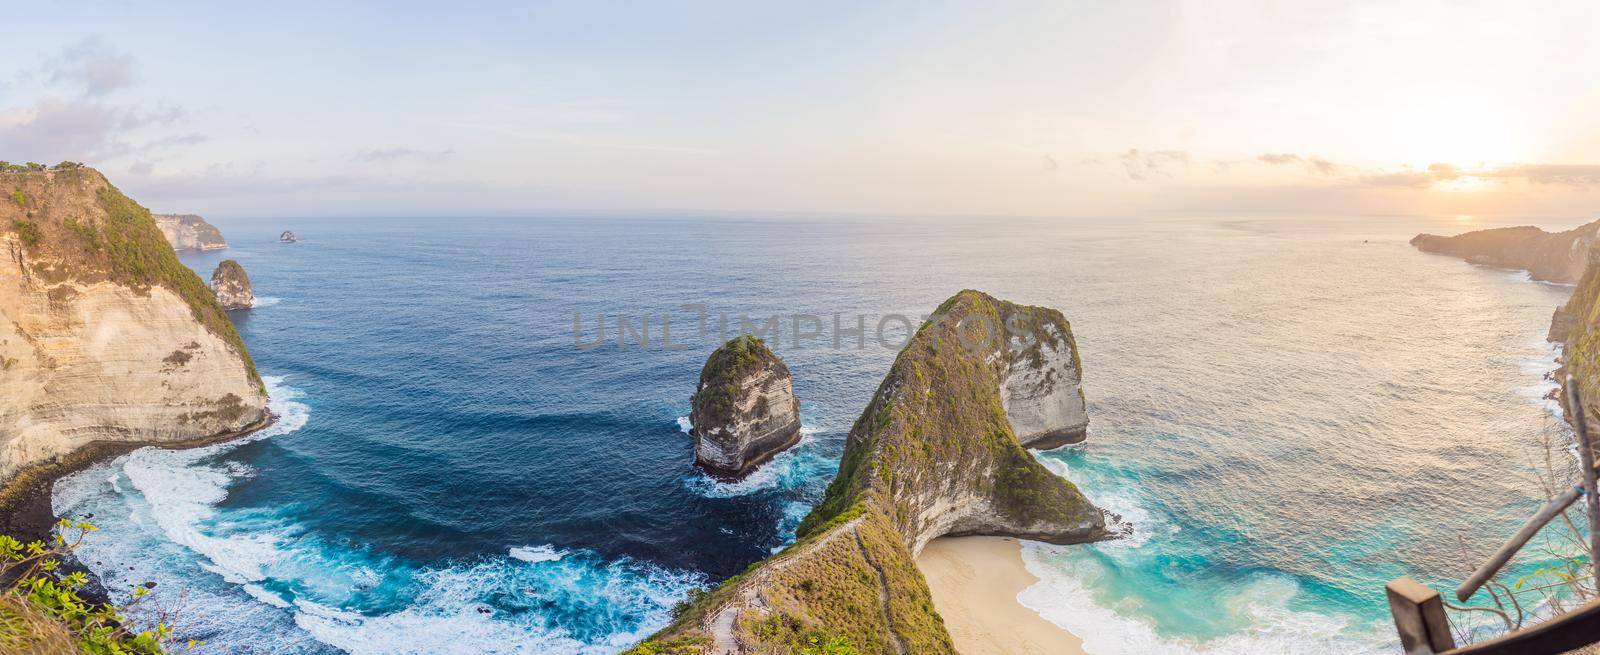 Manta Bay or Kelingking Beach on Nusa Penida Island, Bali, Indonesia by galitskaya